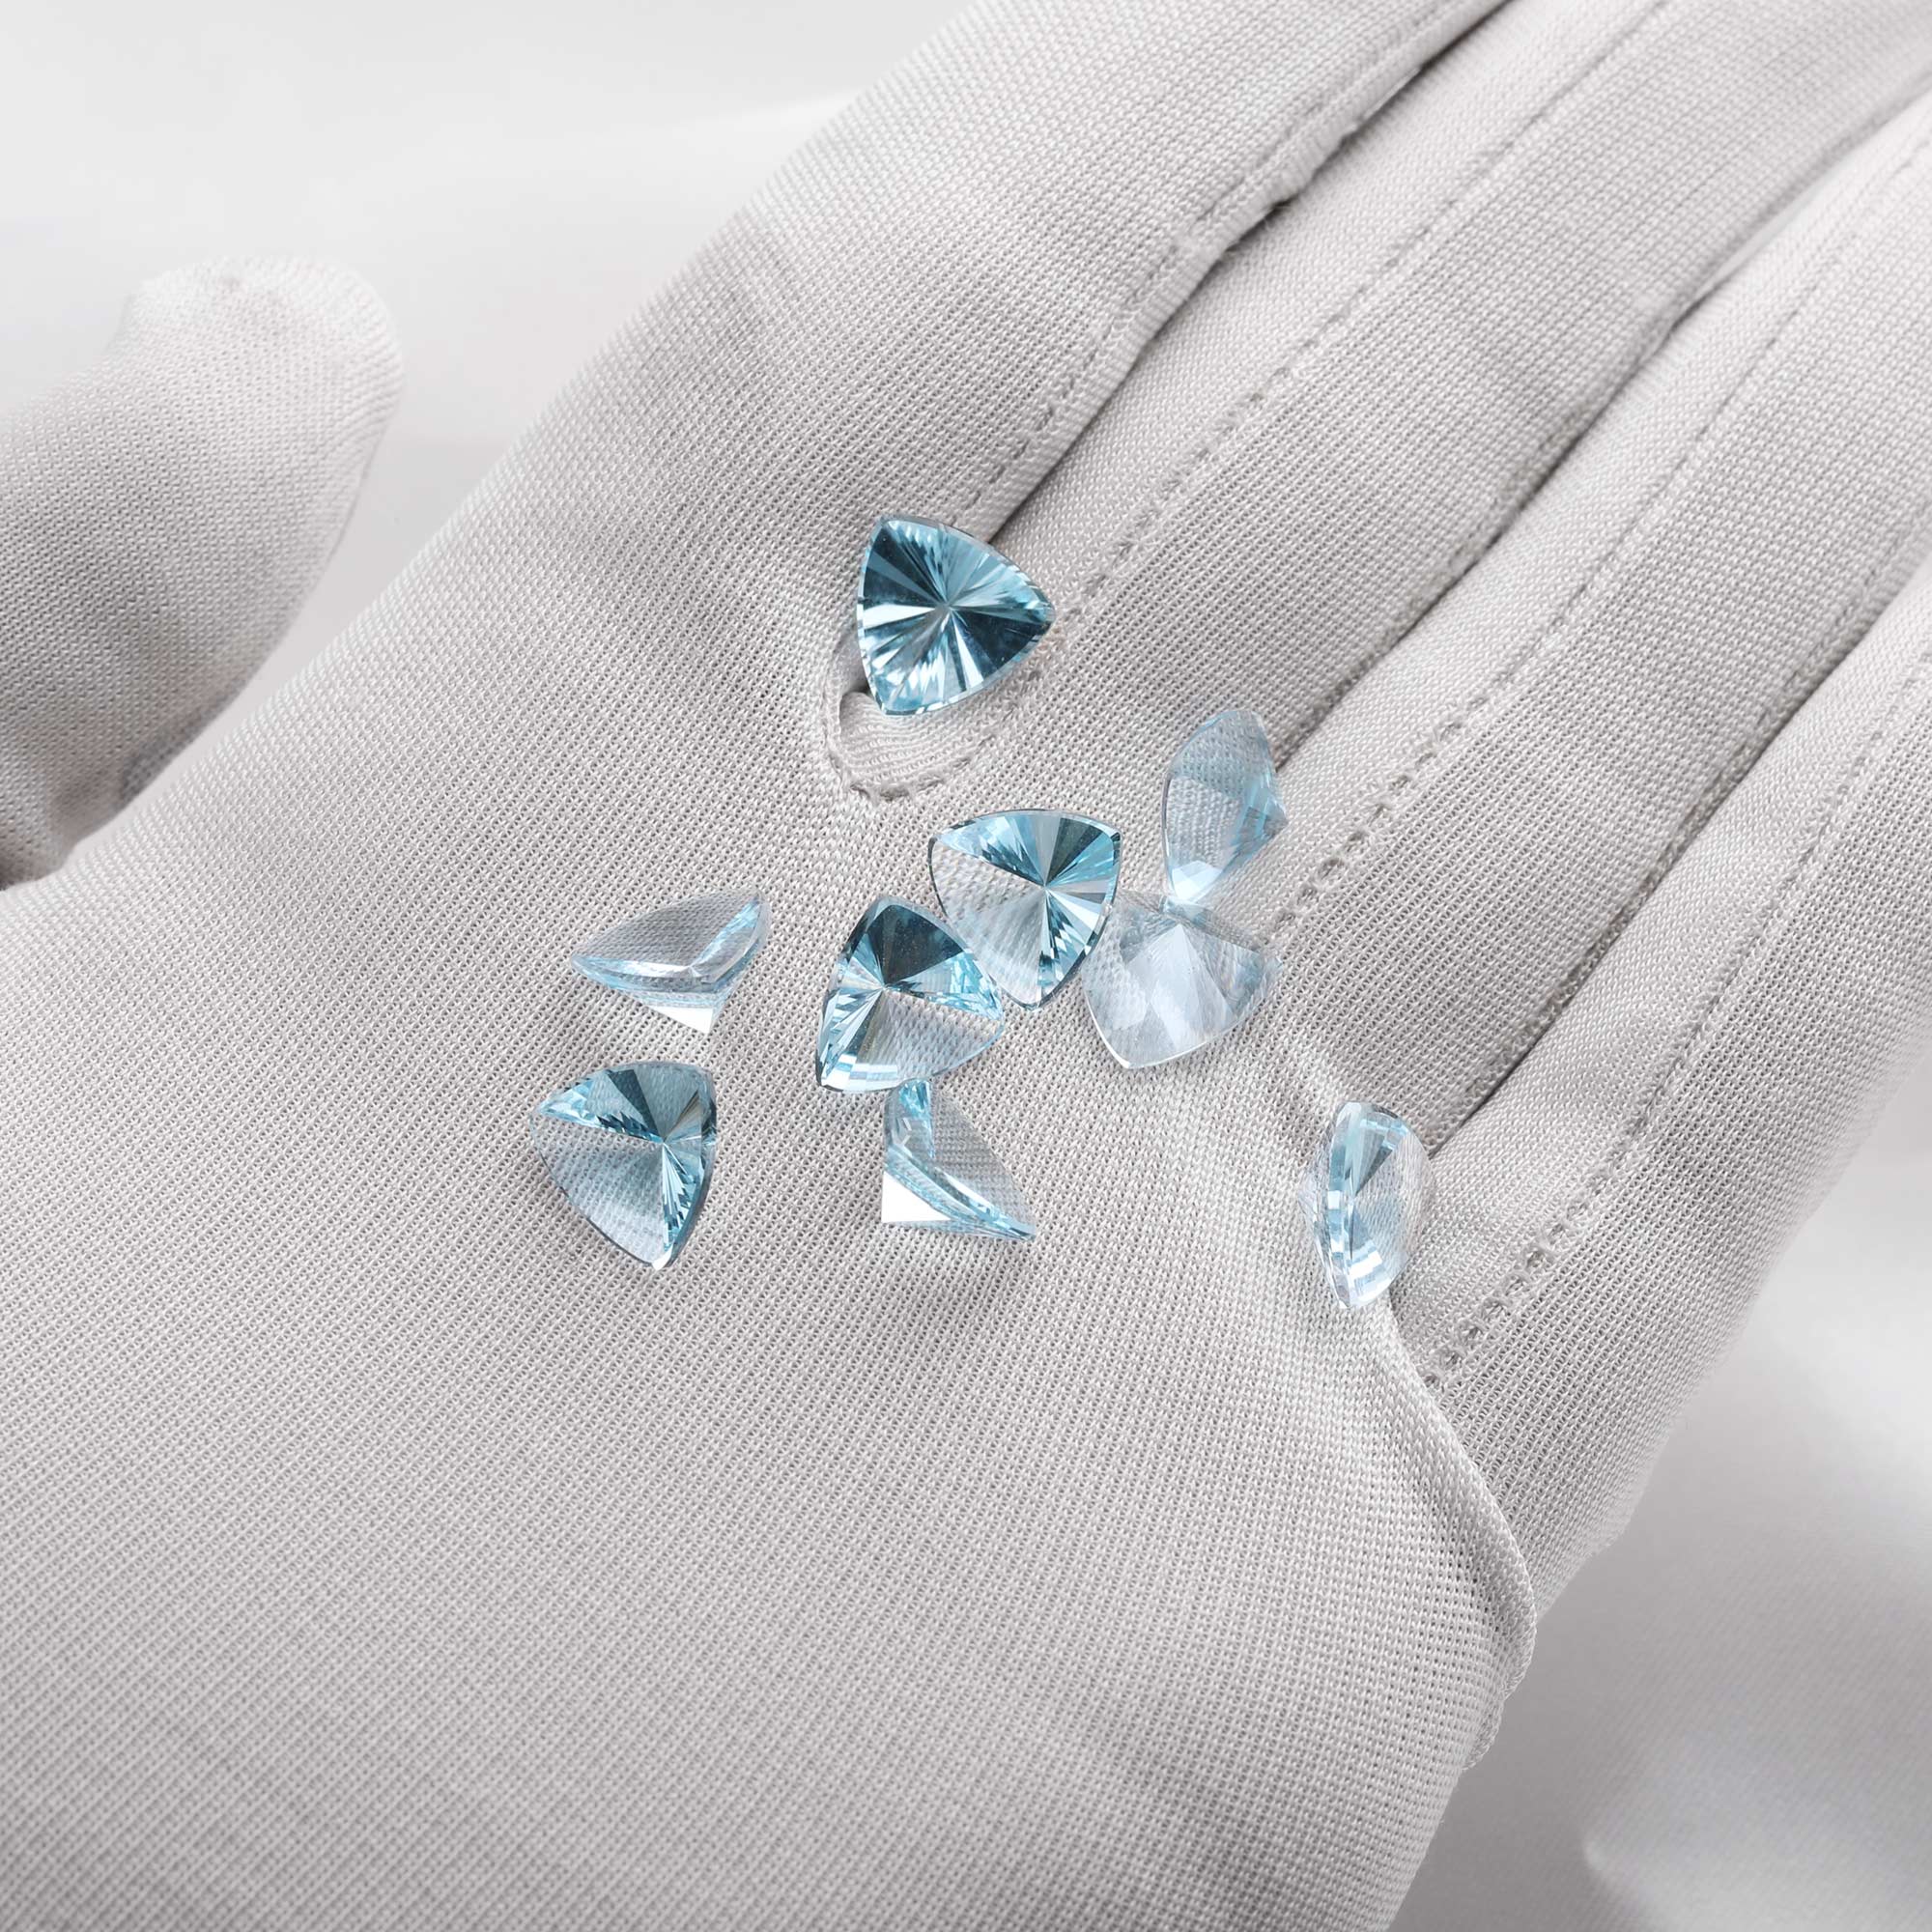 10MM Trillion Cut Nature Sky Blue Topaz Gemstone,November Birthstone,Blue Triangle Gemstone,DIY Jewelry Supplies,2.5CT - Click Image to Close